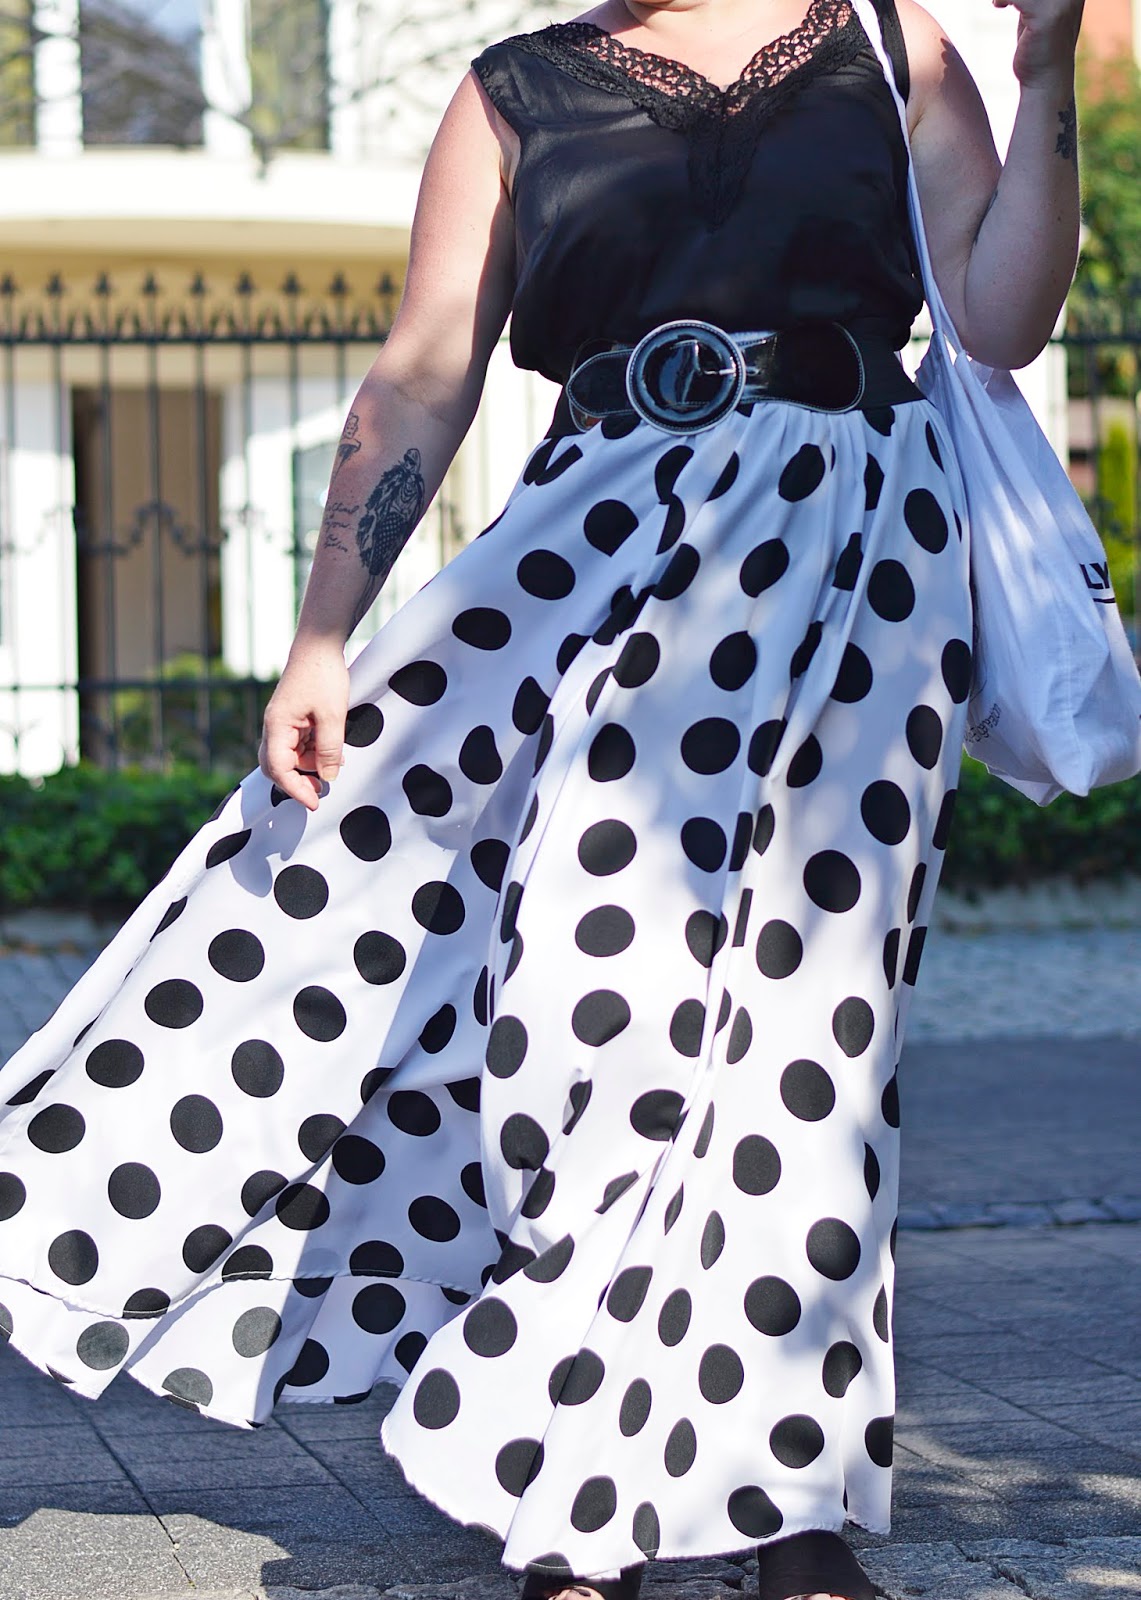 Black and white fashion, polka dots, Black and white summer.